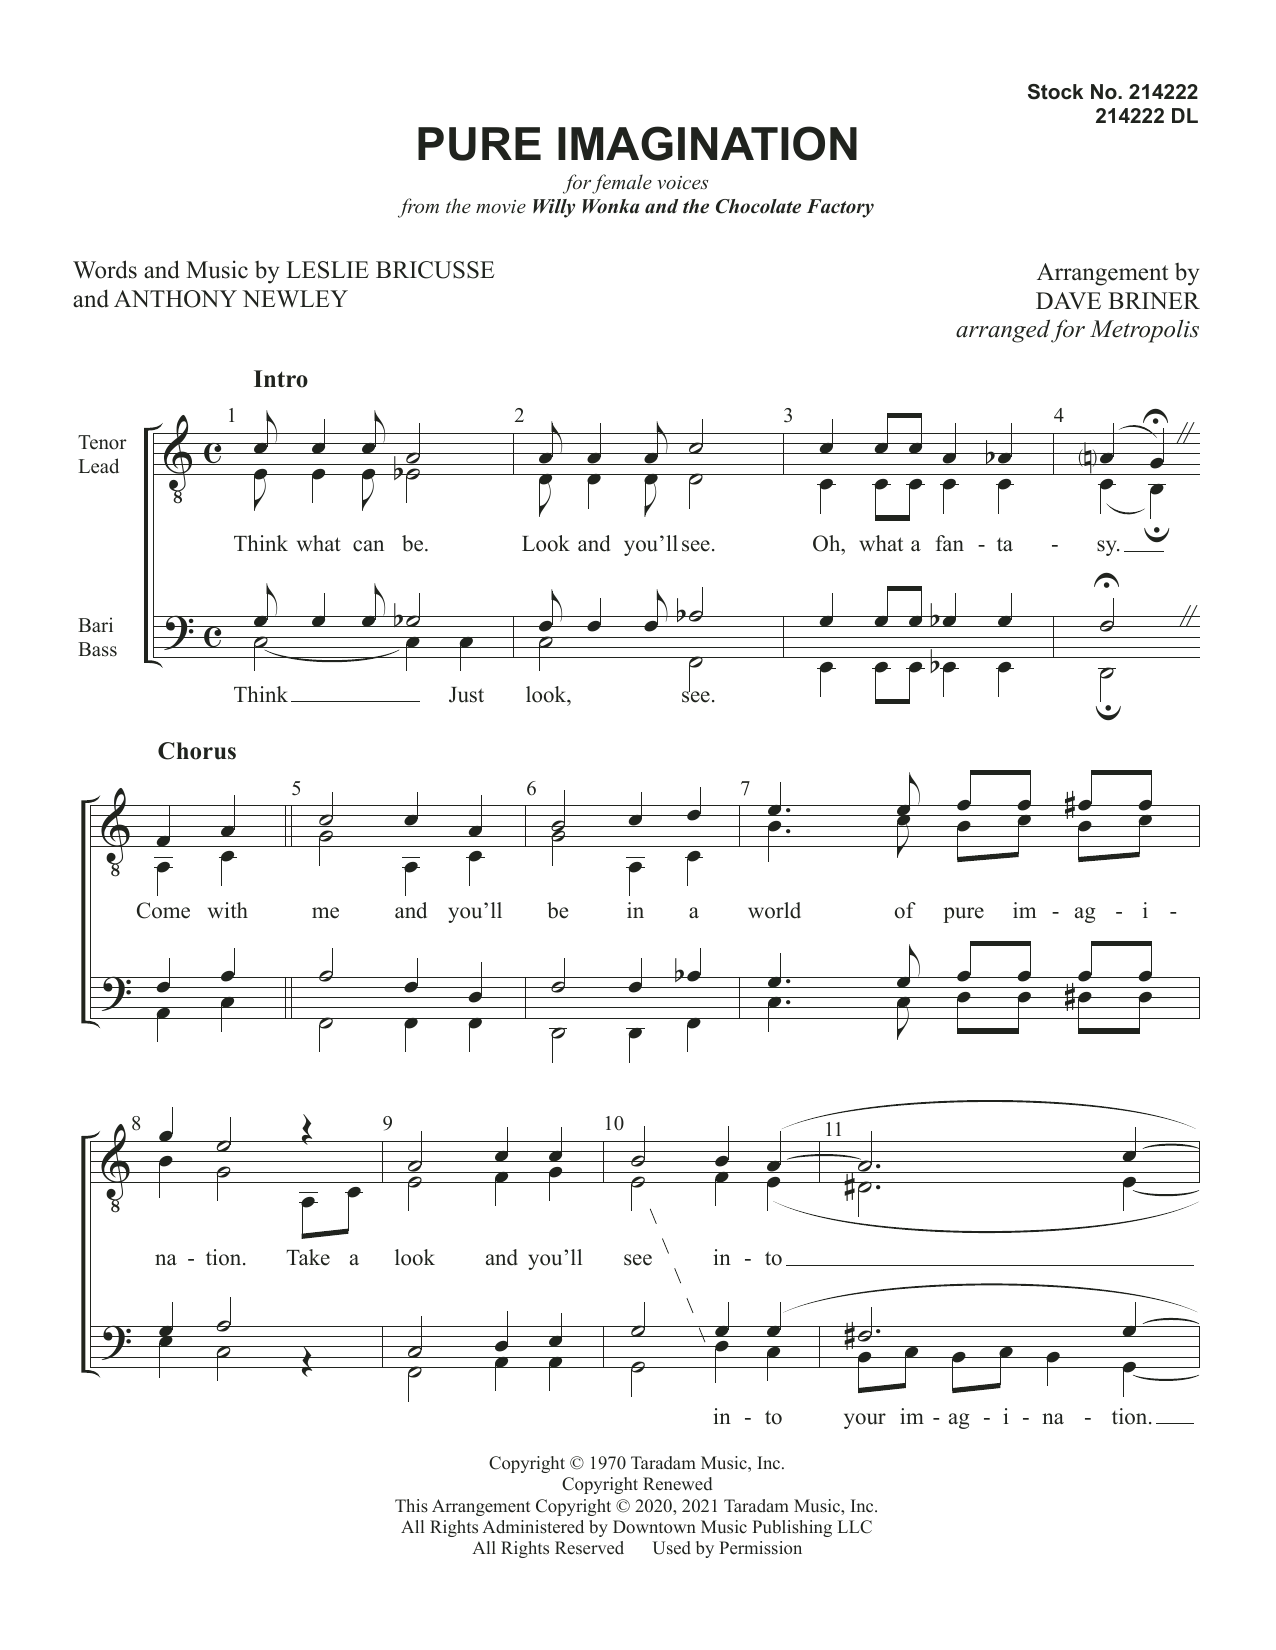 Metropolis Pure Imagination (arr. Dave Briner) Sheet Music Notes & Chords for TTBB Choir - Download or Print PDF